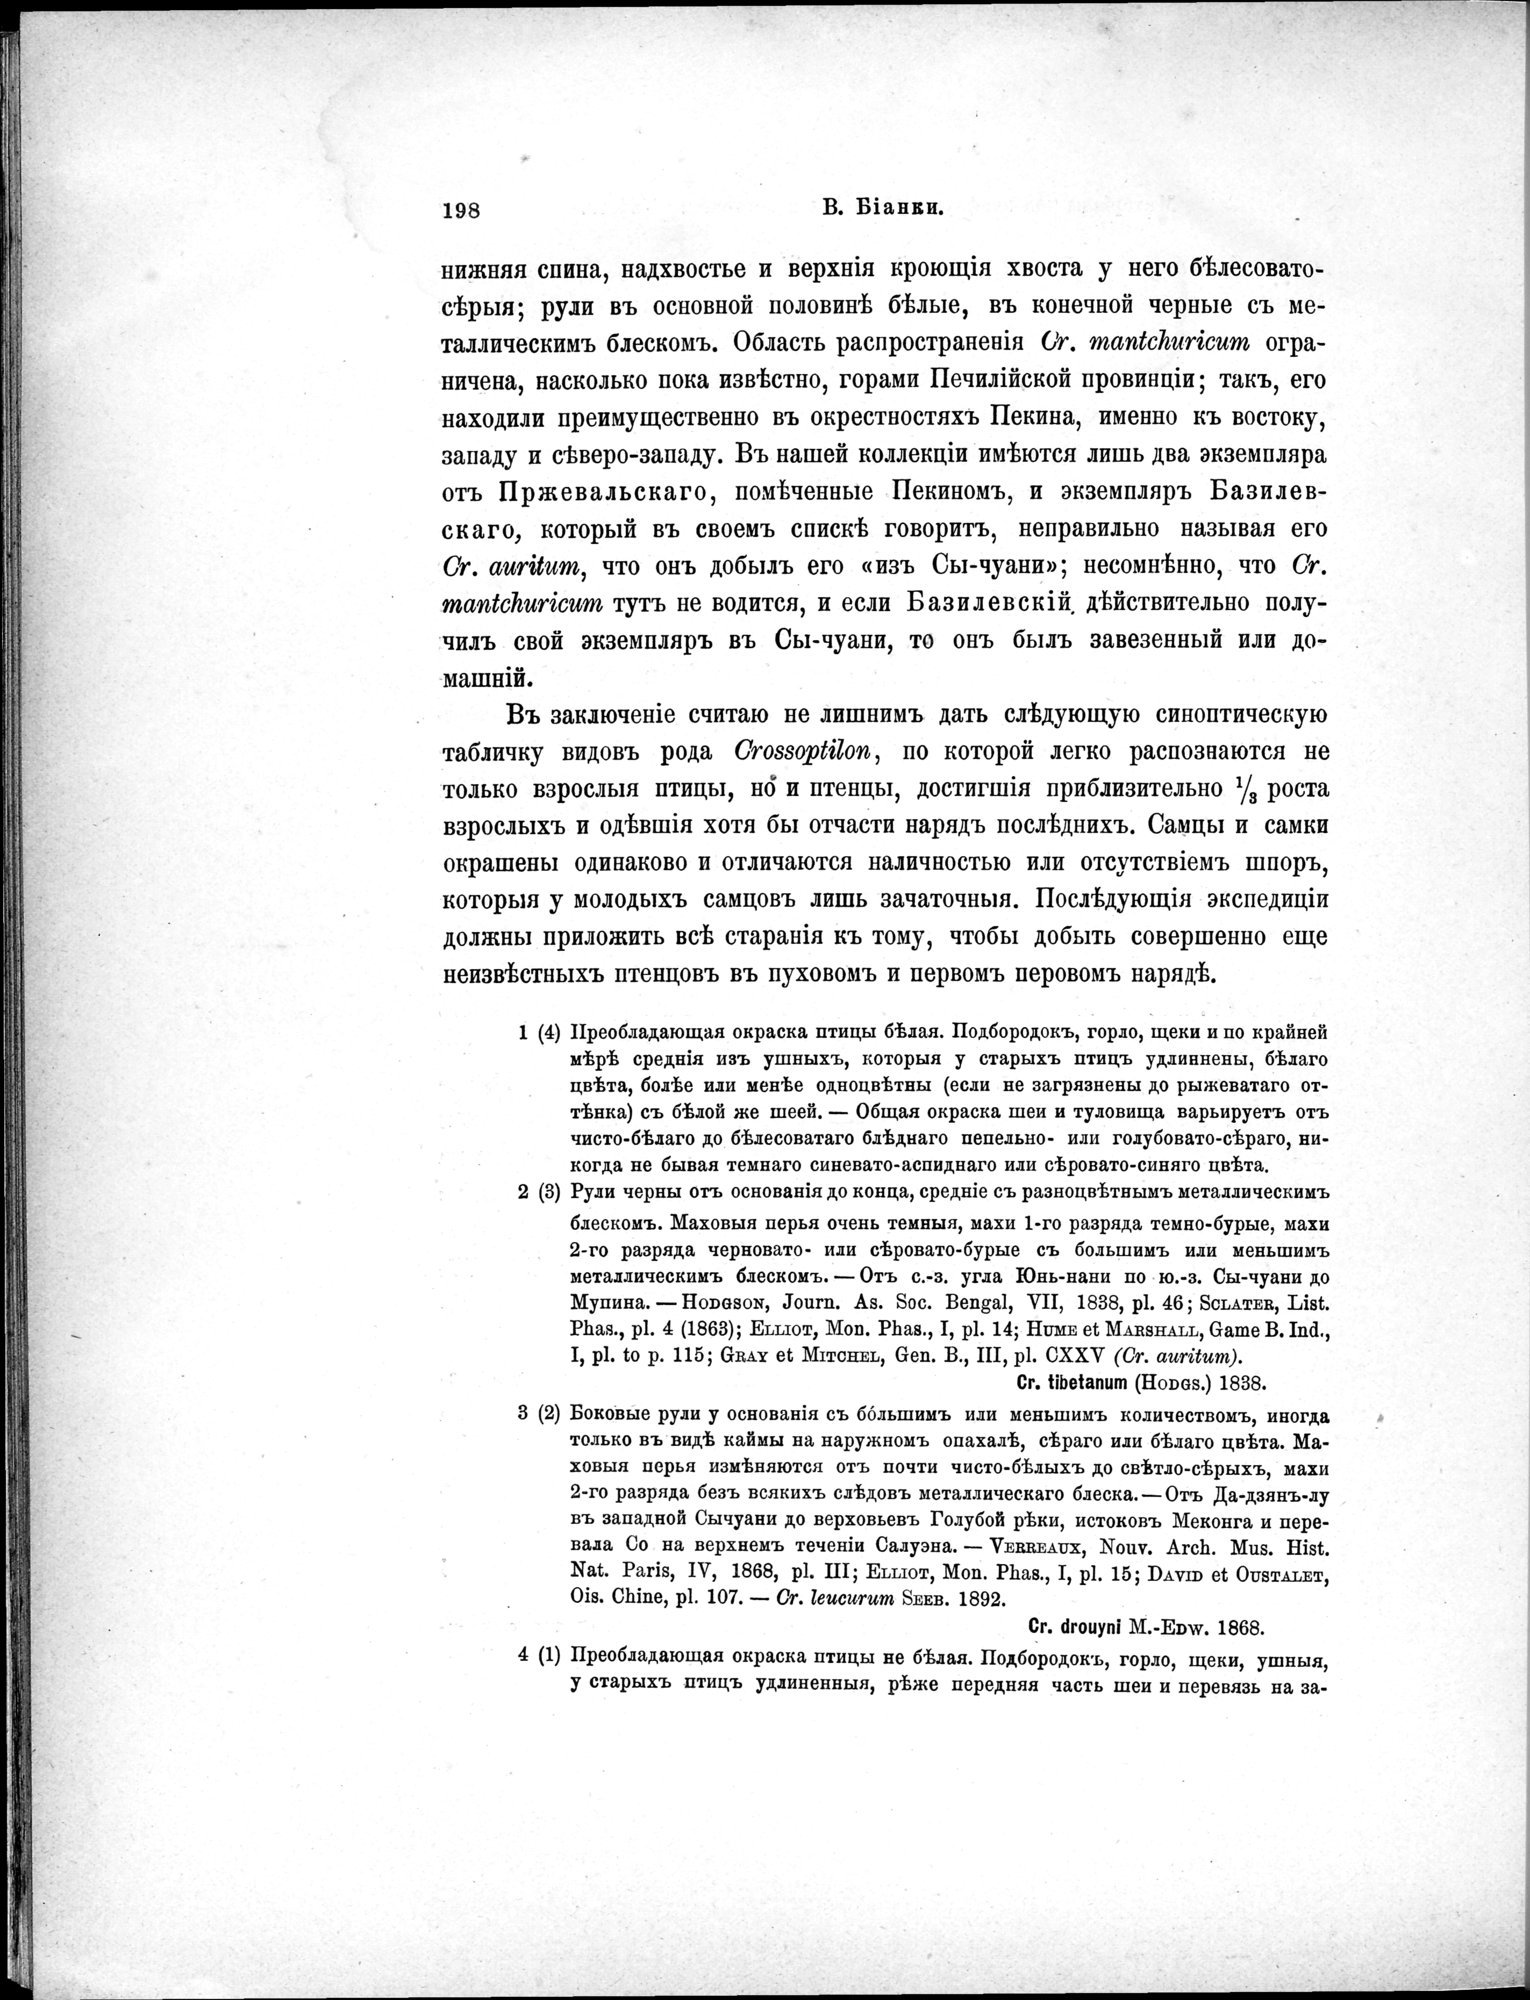 Mongoliia i Kam : vol.5 / Page 270 (Grayscale High Resolution Image)